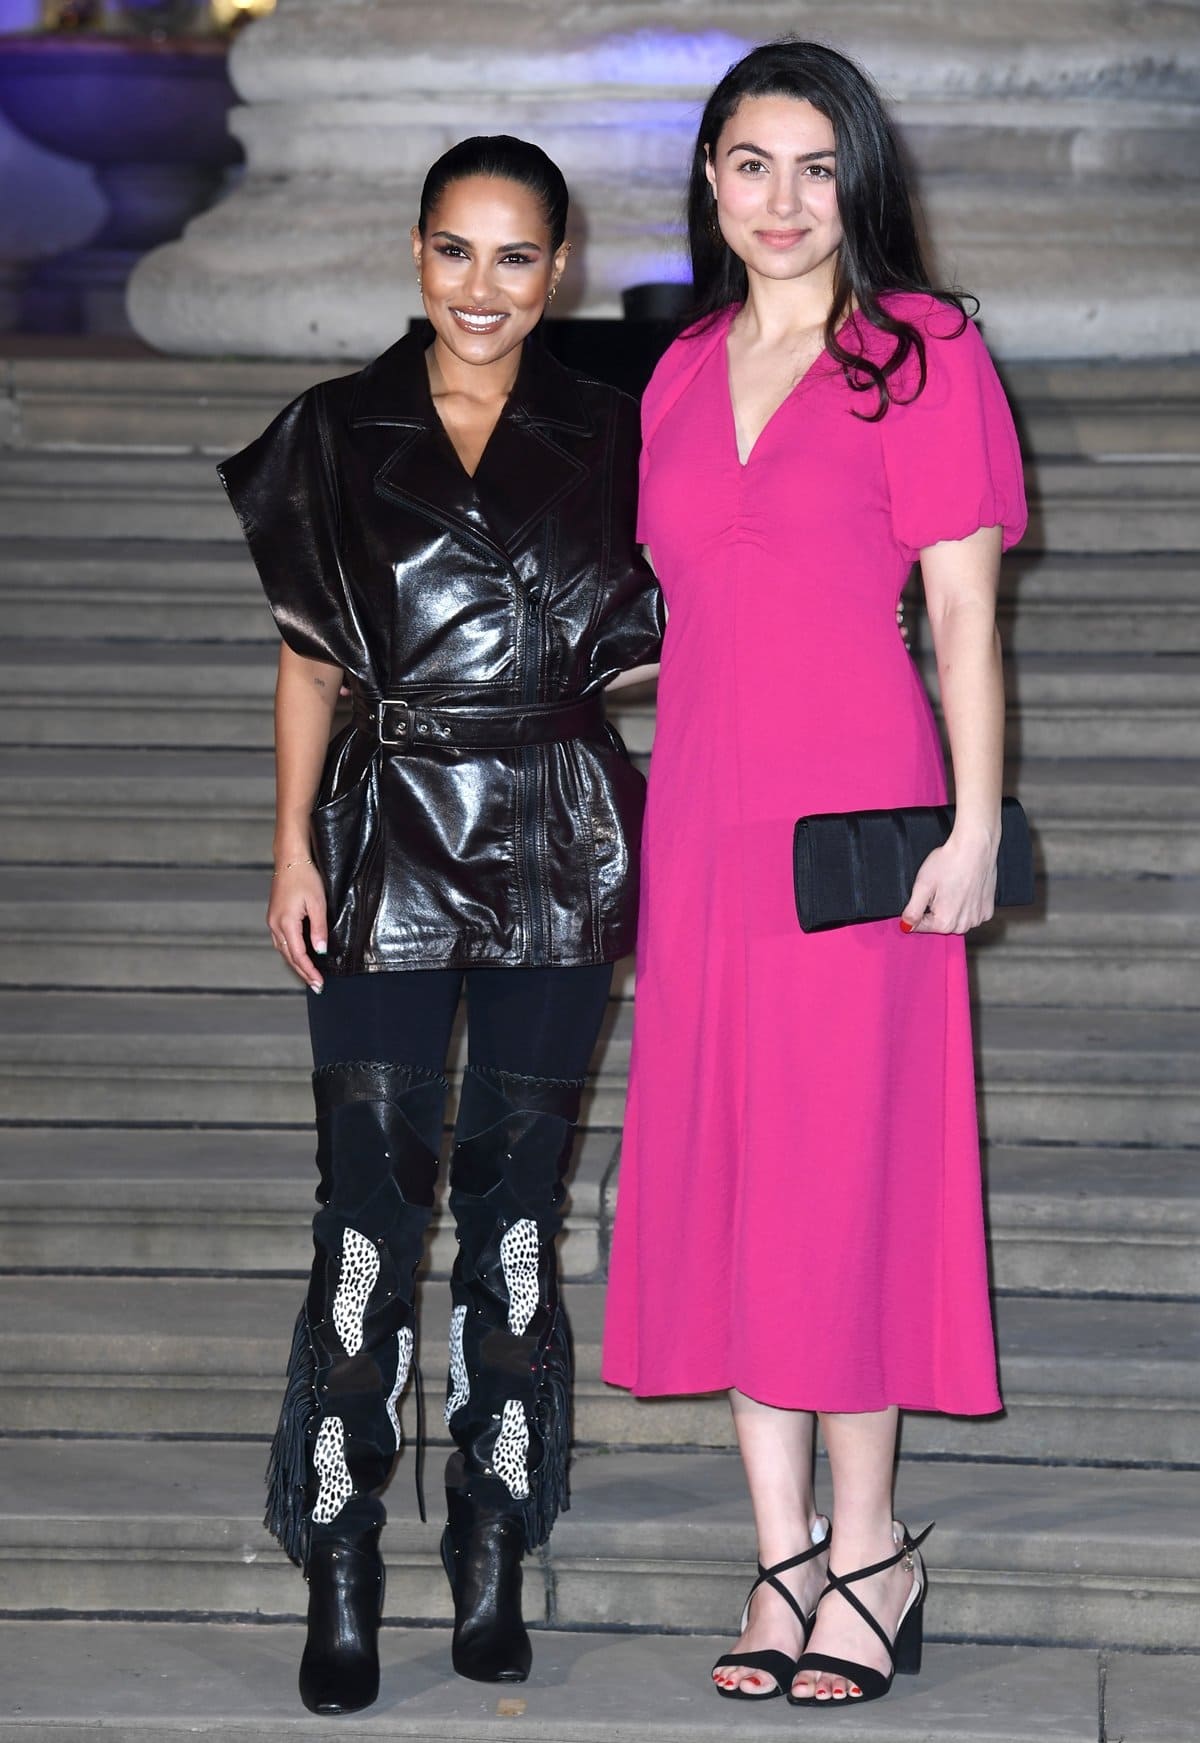 Saffron Hocking (L) and her much taller co-star Antonia Salib (R) attend the "Moon Knight" premiere